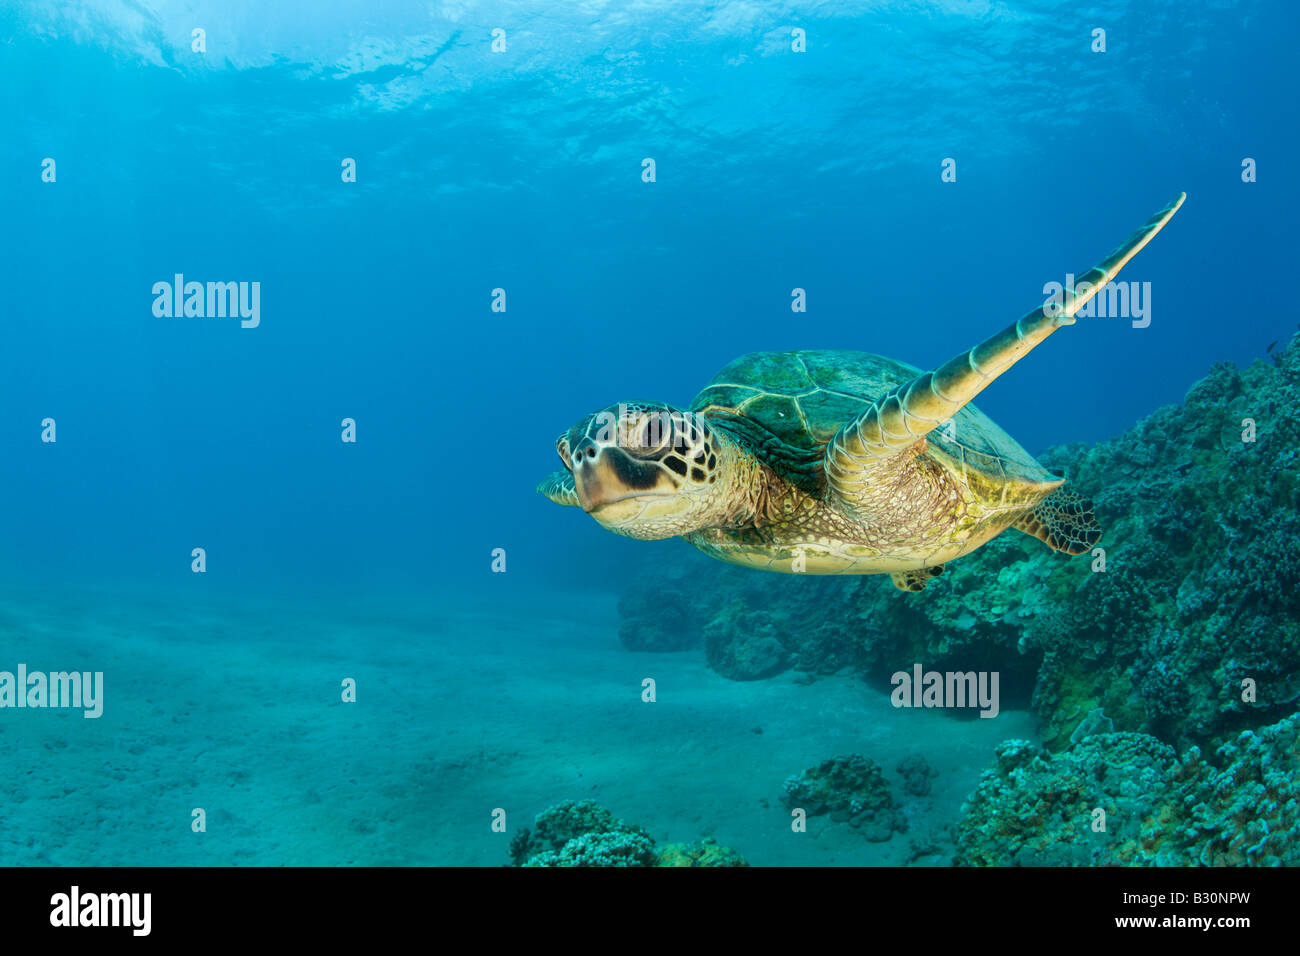 Tartaruga Verde Chelonia Mydas Isole Marshall Bikini Atoll Micronesia Oceano Pacifico Foto Stock